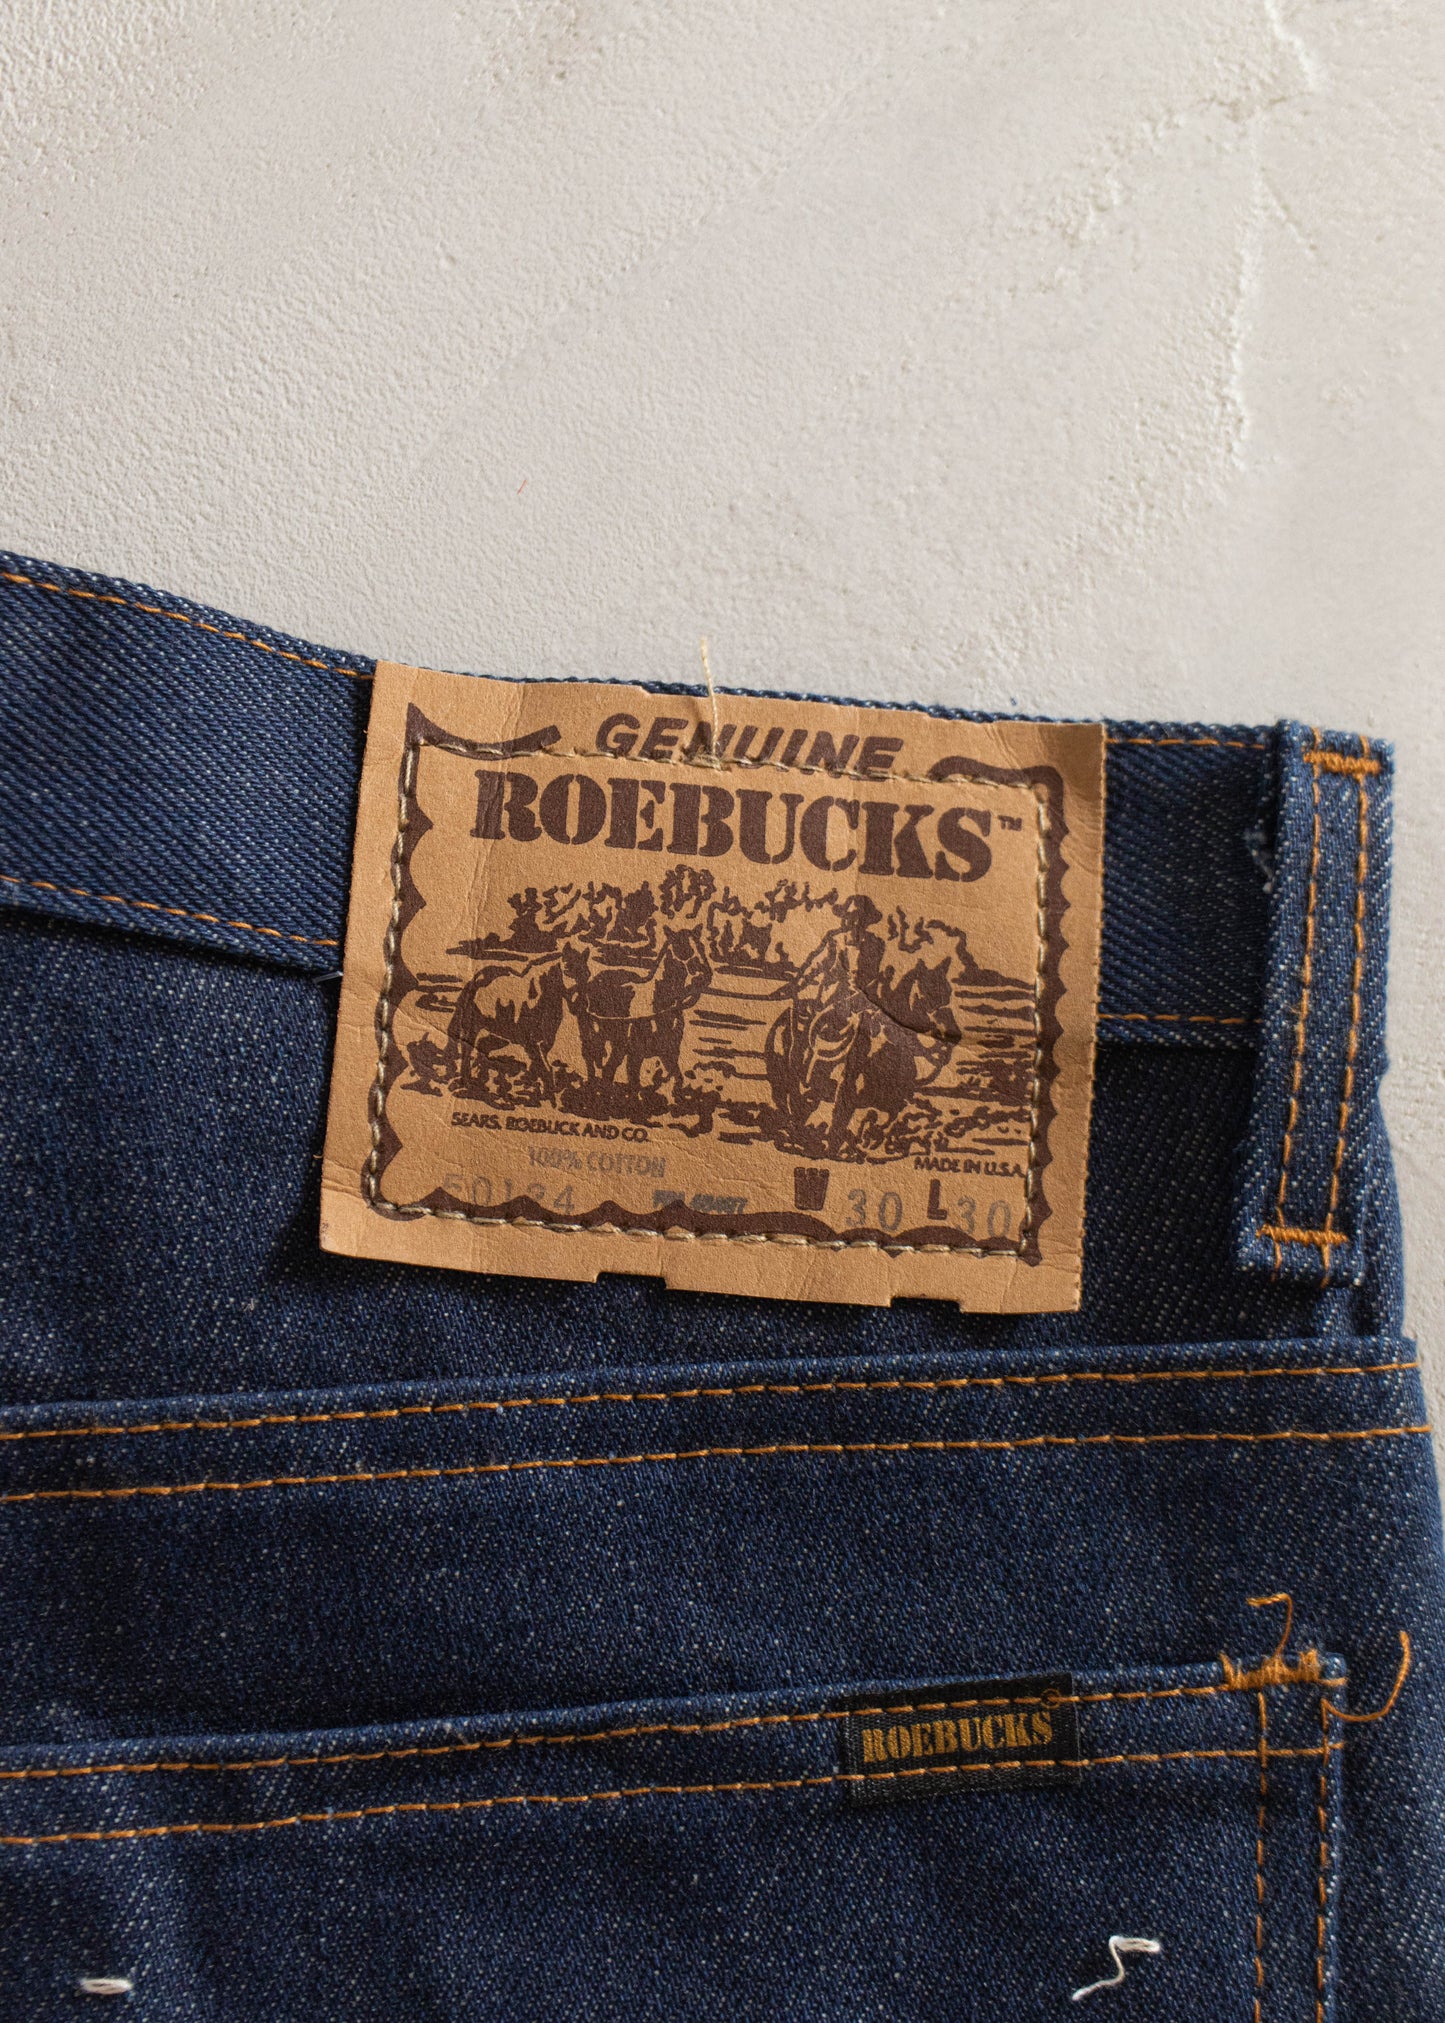 1980s Roebucks Darkwash Jeans Size Women's 27 Men's 30